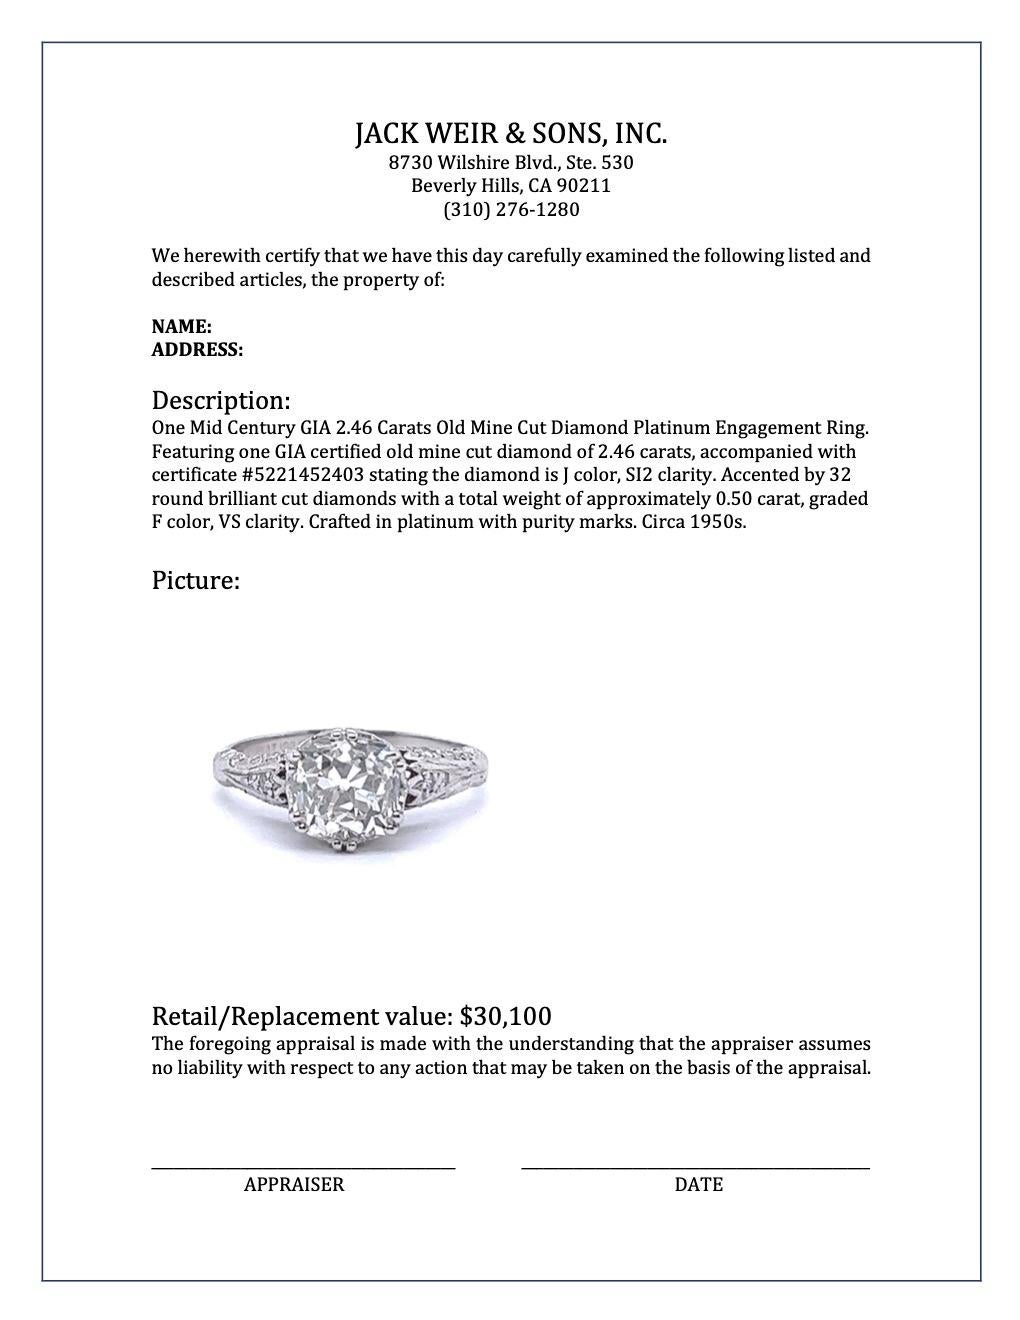 Mid-Century GIA 2.46 Carats Old Mine Cut Diamond Platinum Engagement Ring 4